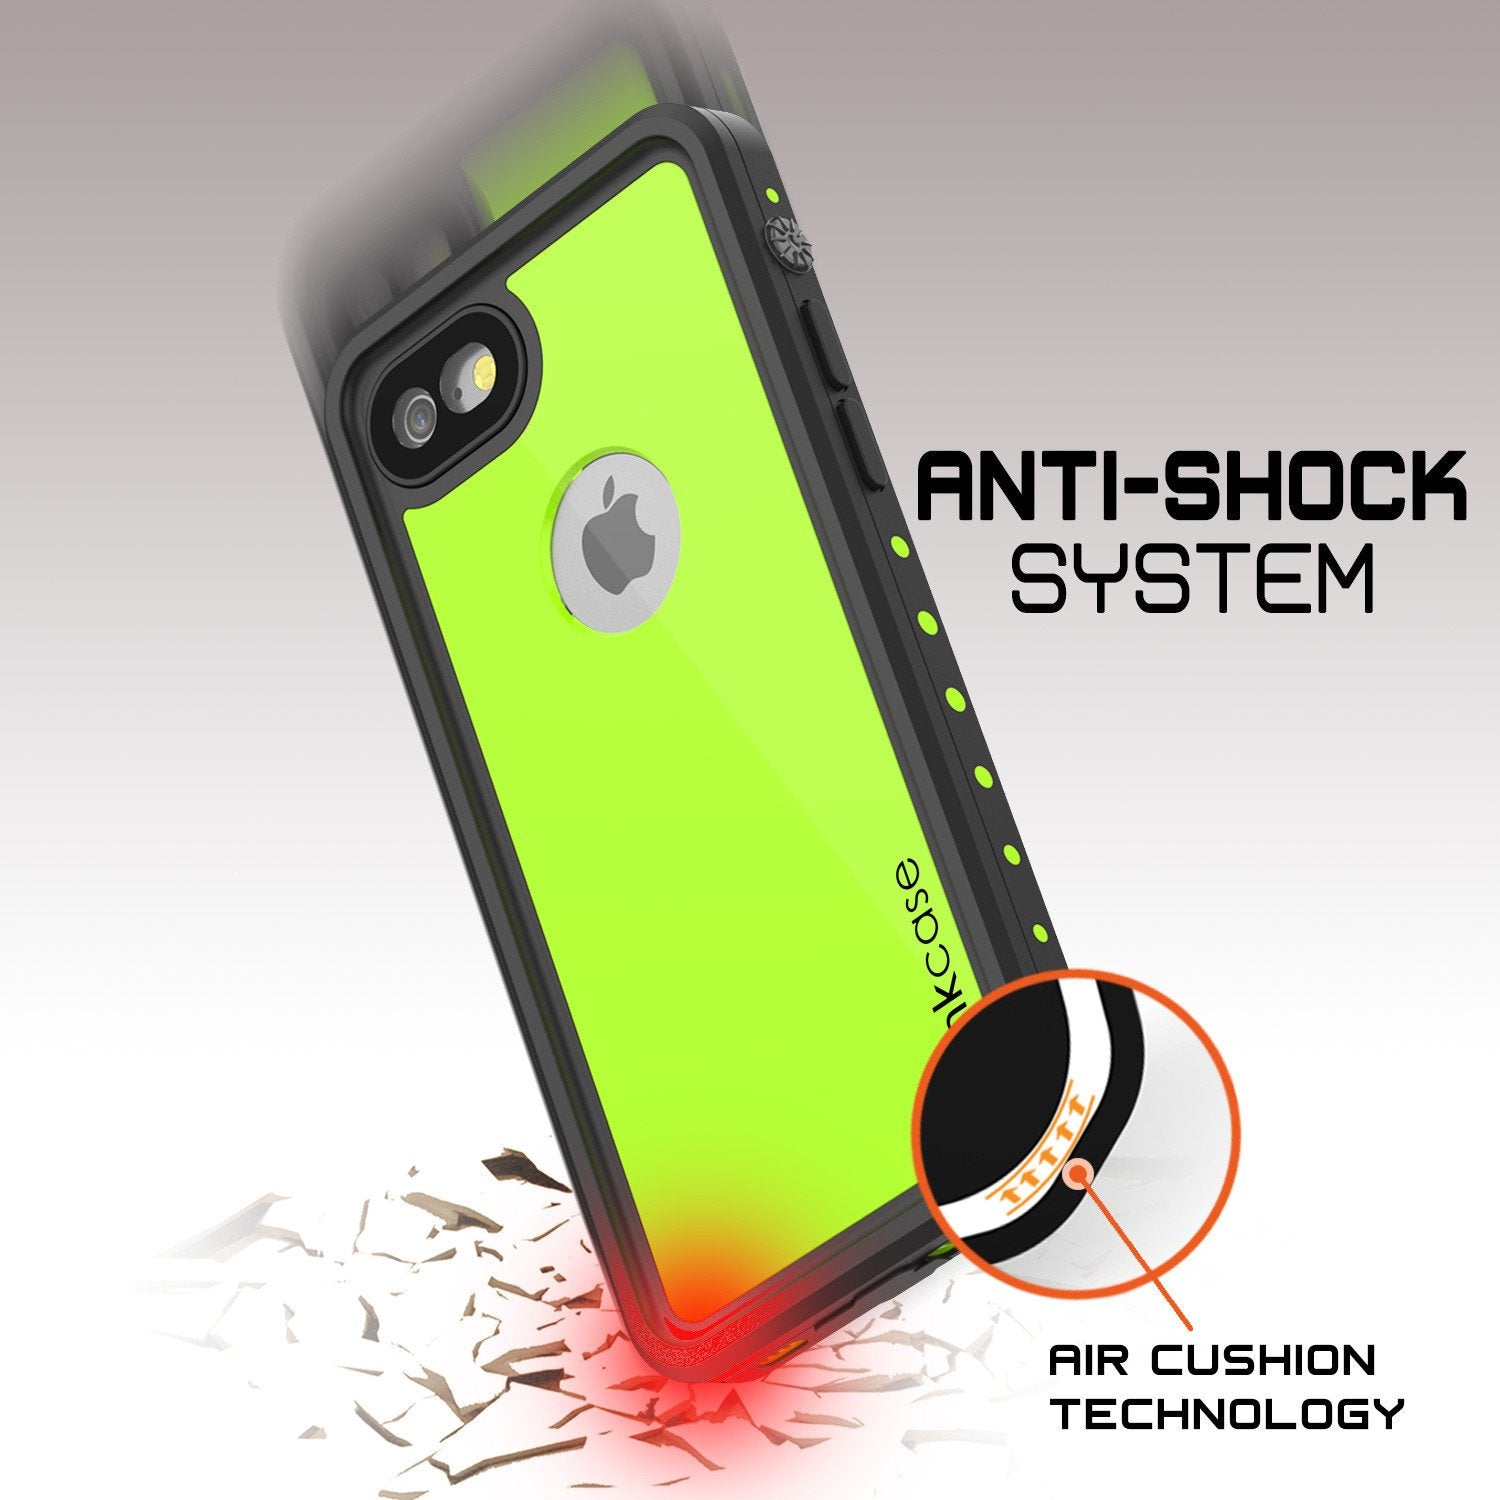 iPhone 7 Waterproof IP68 Case, Punkcase [Light Green] [StudStar Series] [Slim Fit] [Dirt/Snow Proof] - PunkCase NZ